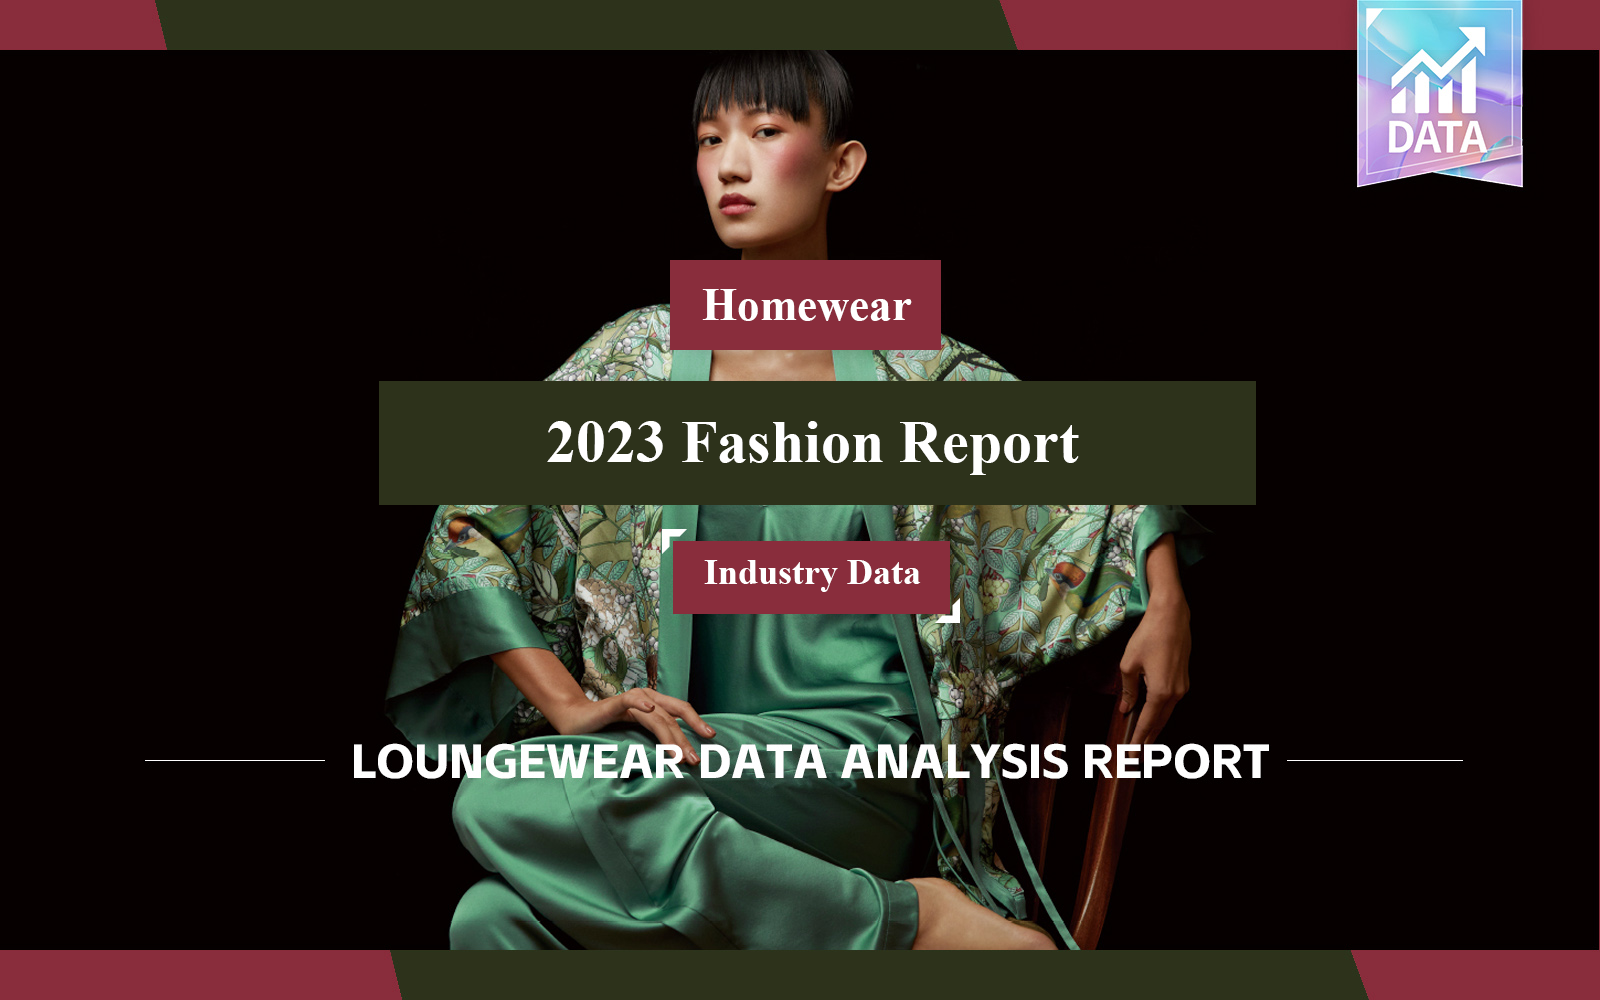 2023 Annual Fashion Report of Women's Homewear